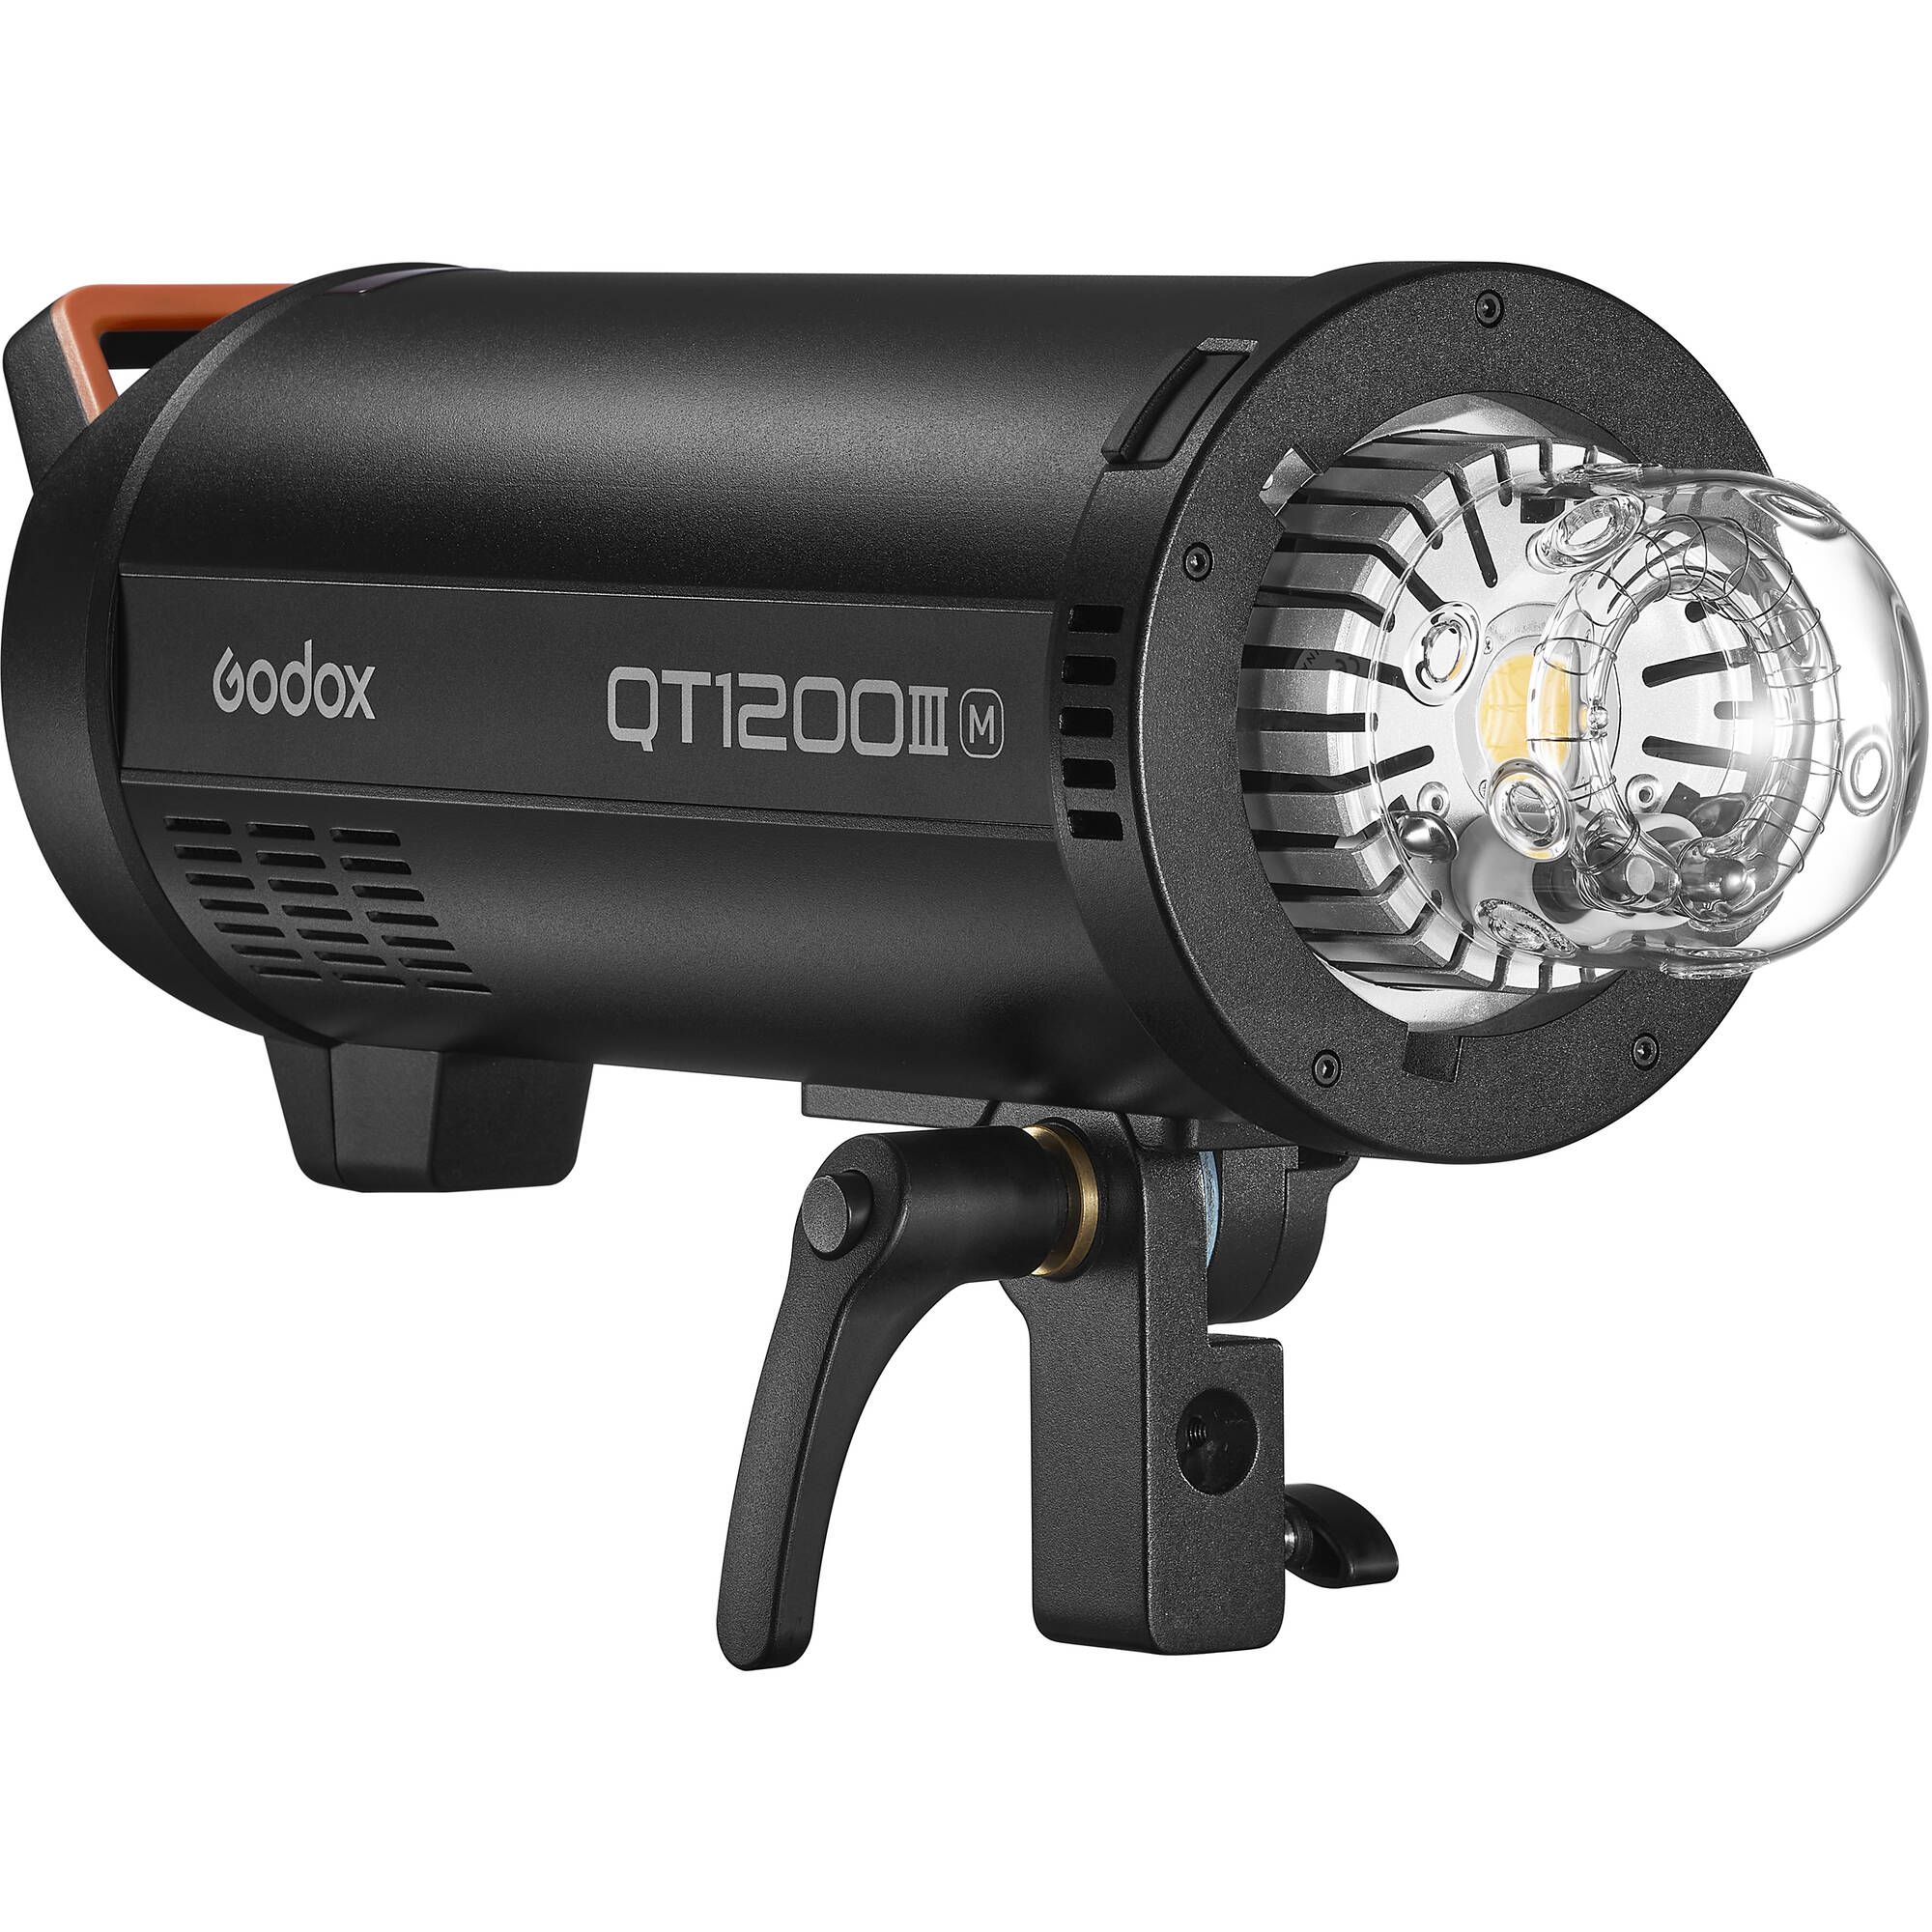 Godox QT1200iiiM HSS Studio Strobe - Strobepro Studio Lighting